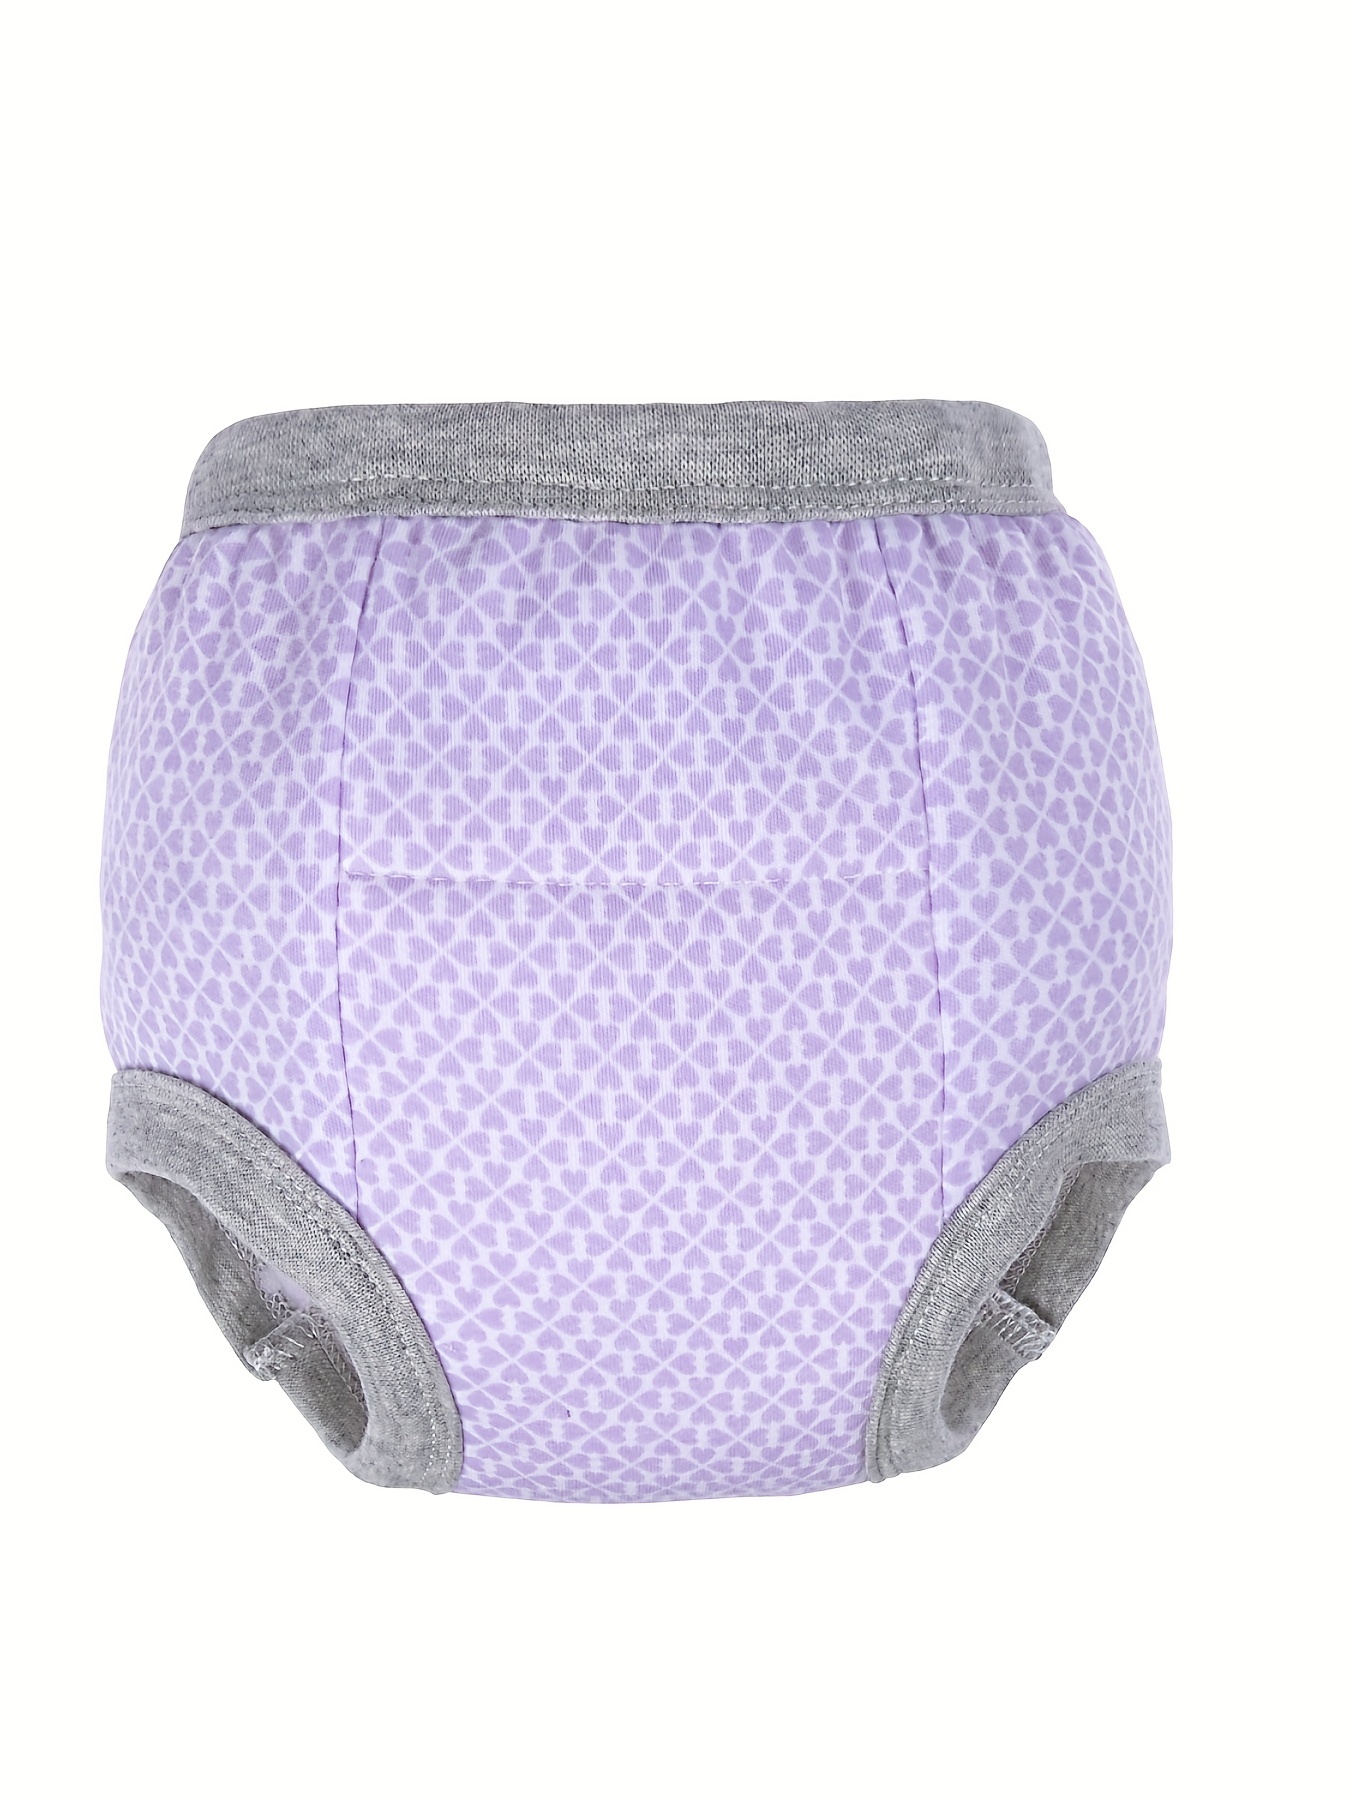 Cheap Insular 2 Pcs Training Pants Underwear 6 Layers Breathable Cotton  Toddler Potty Training Underwear